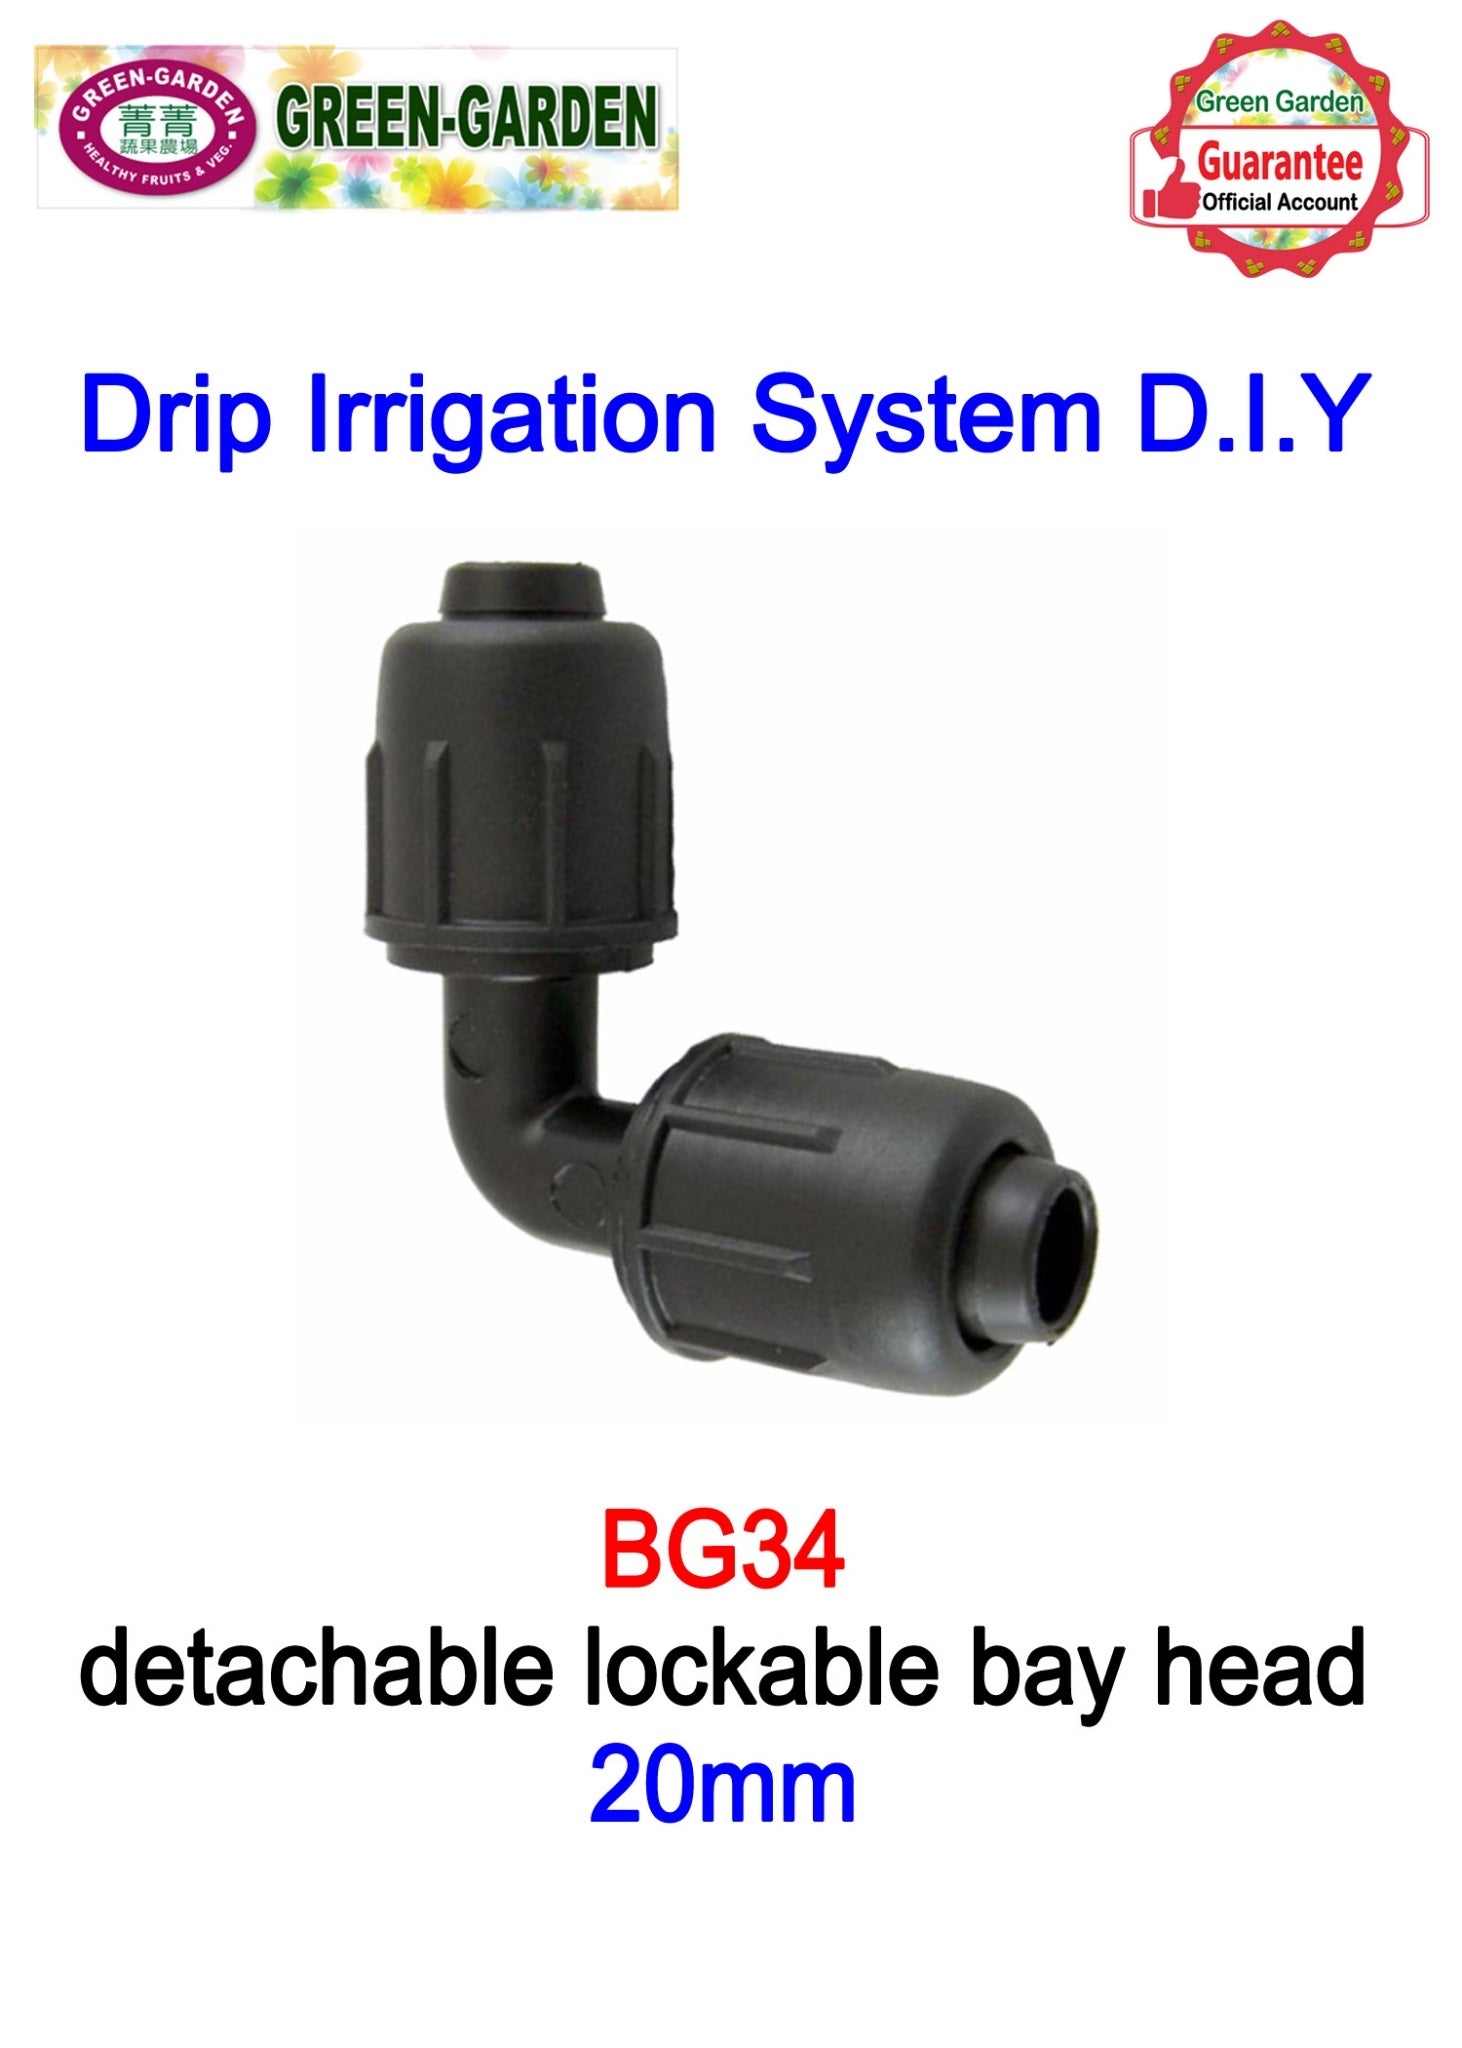 Drip Irrigation System - 20mm detachable lockable bay head BG34